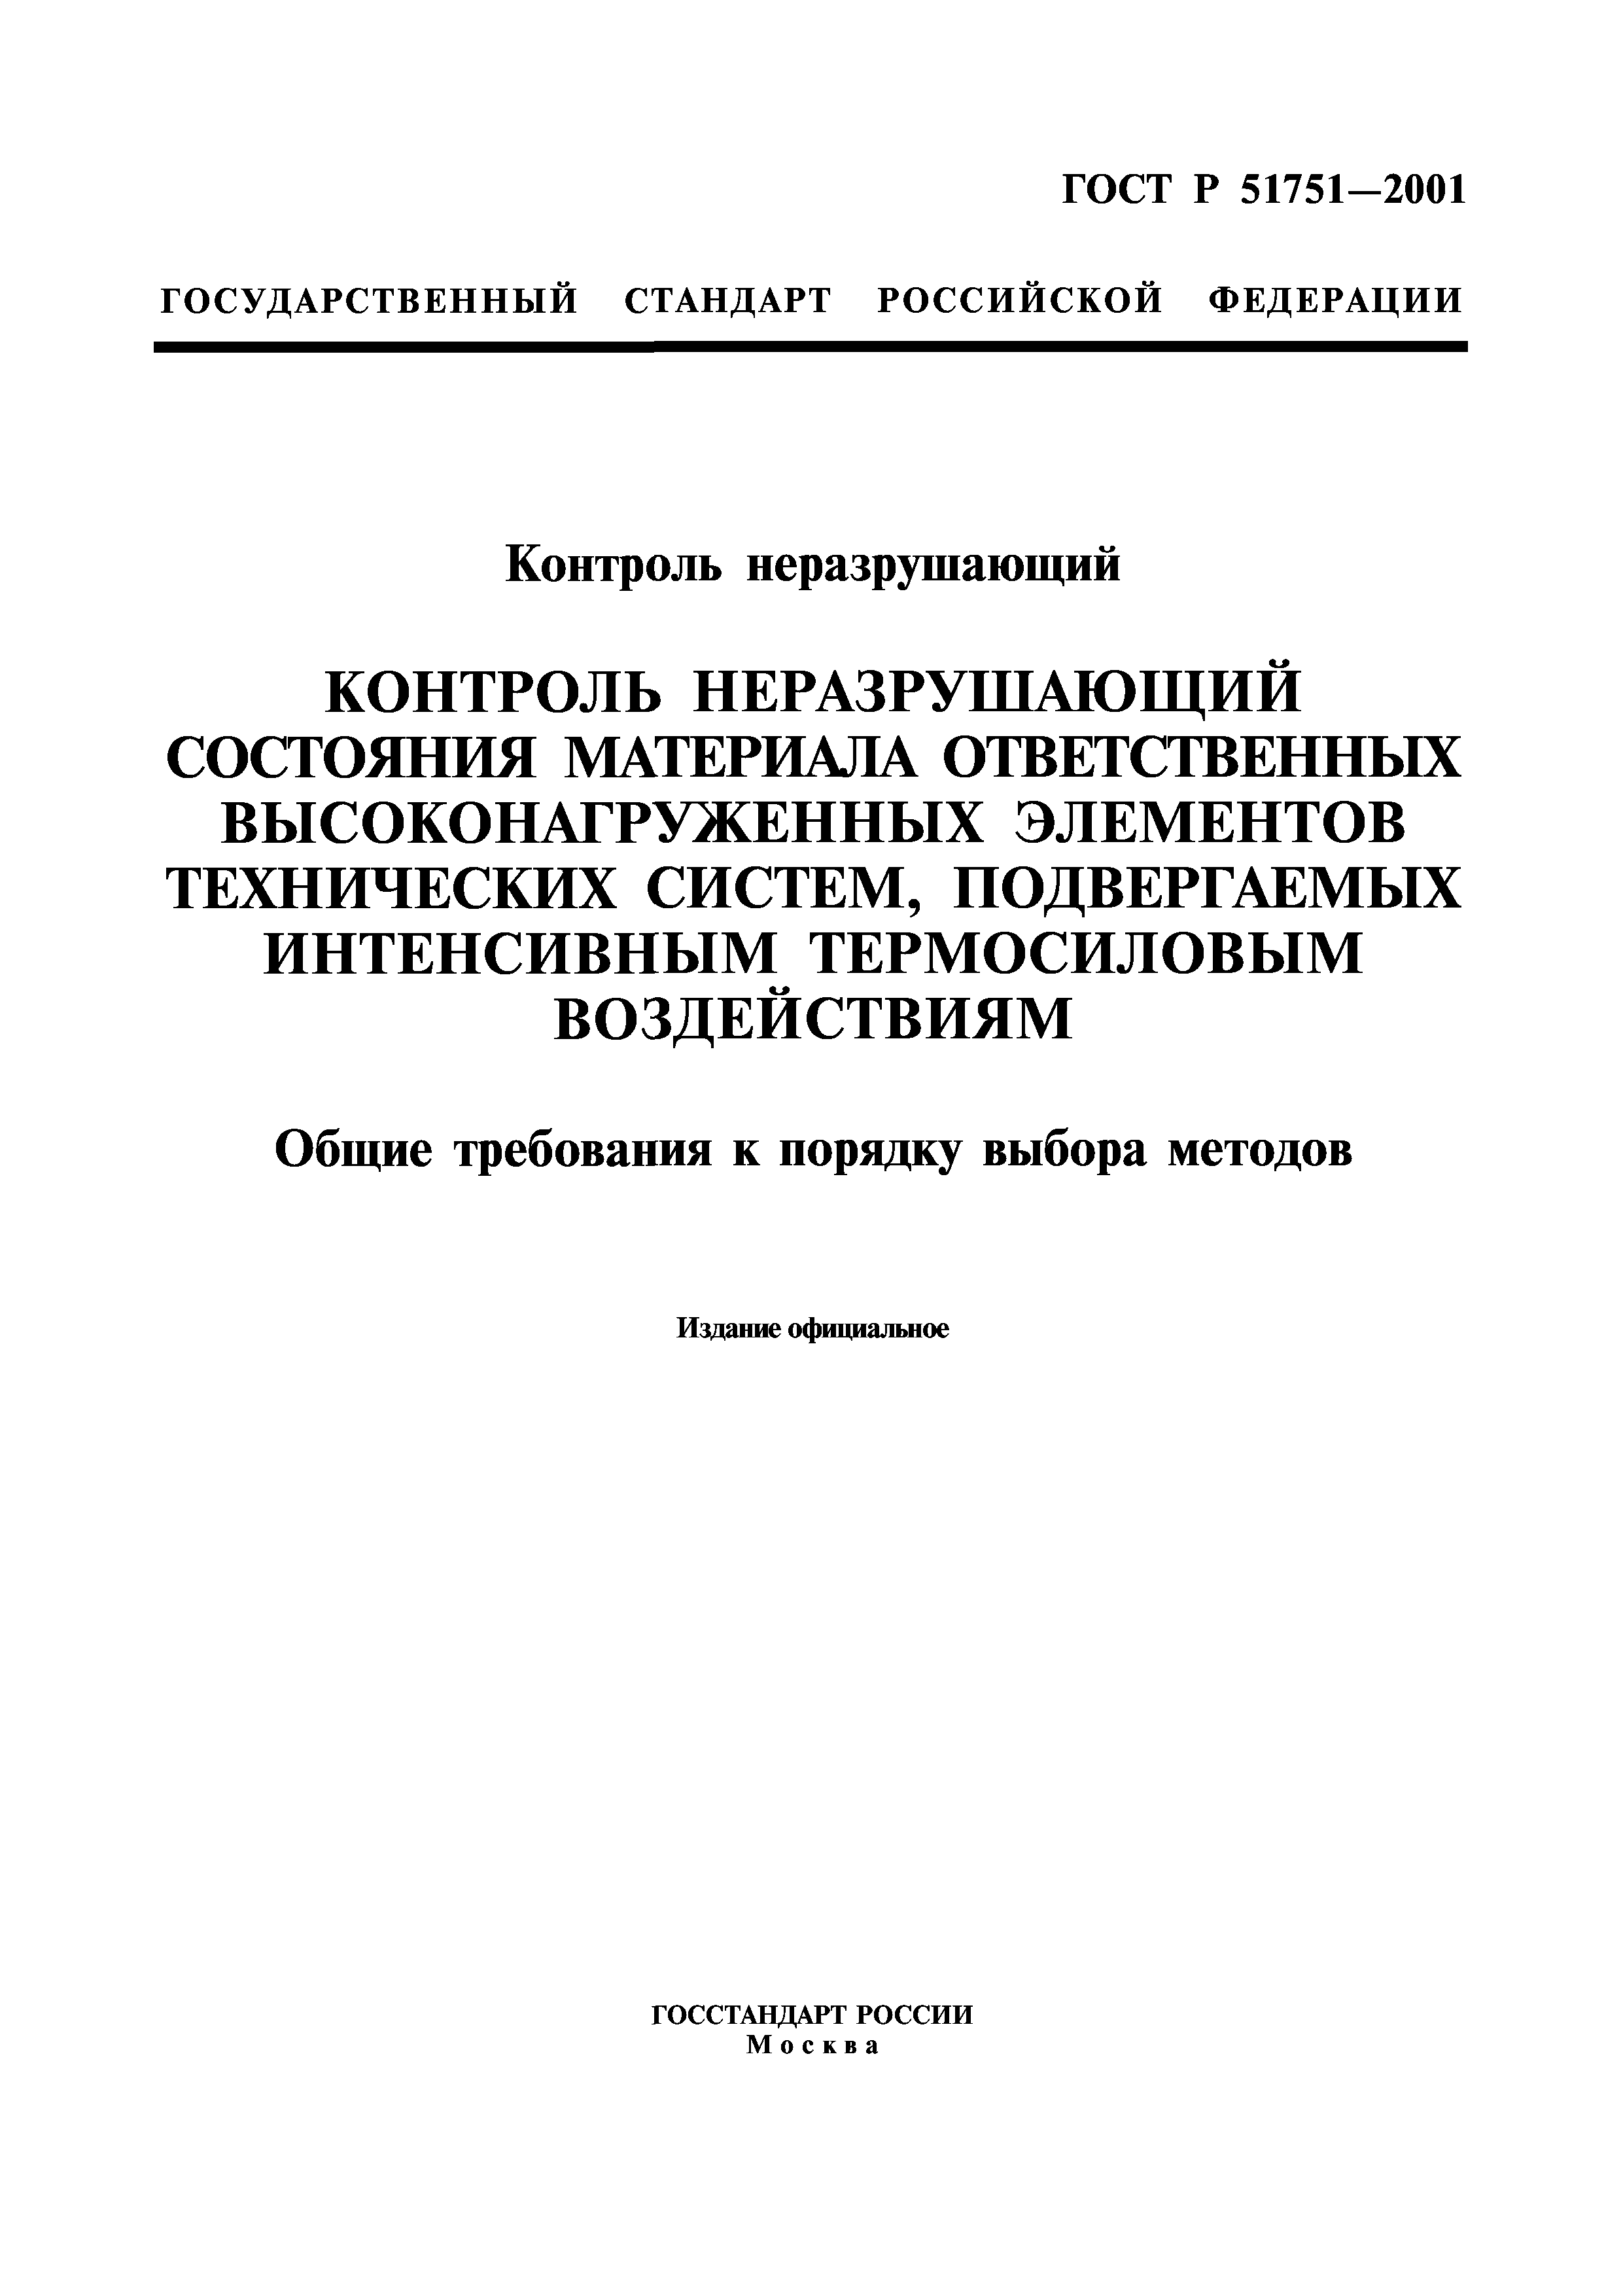 ГОСТ Р 51751-2001